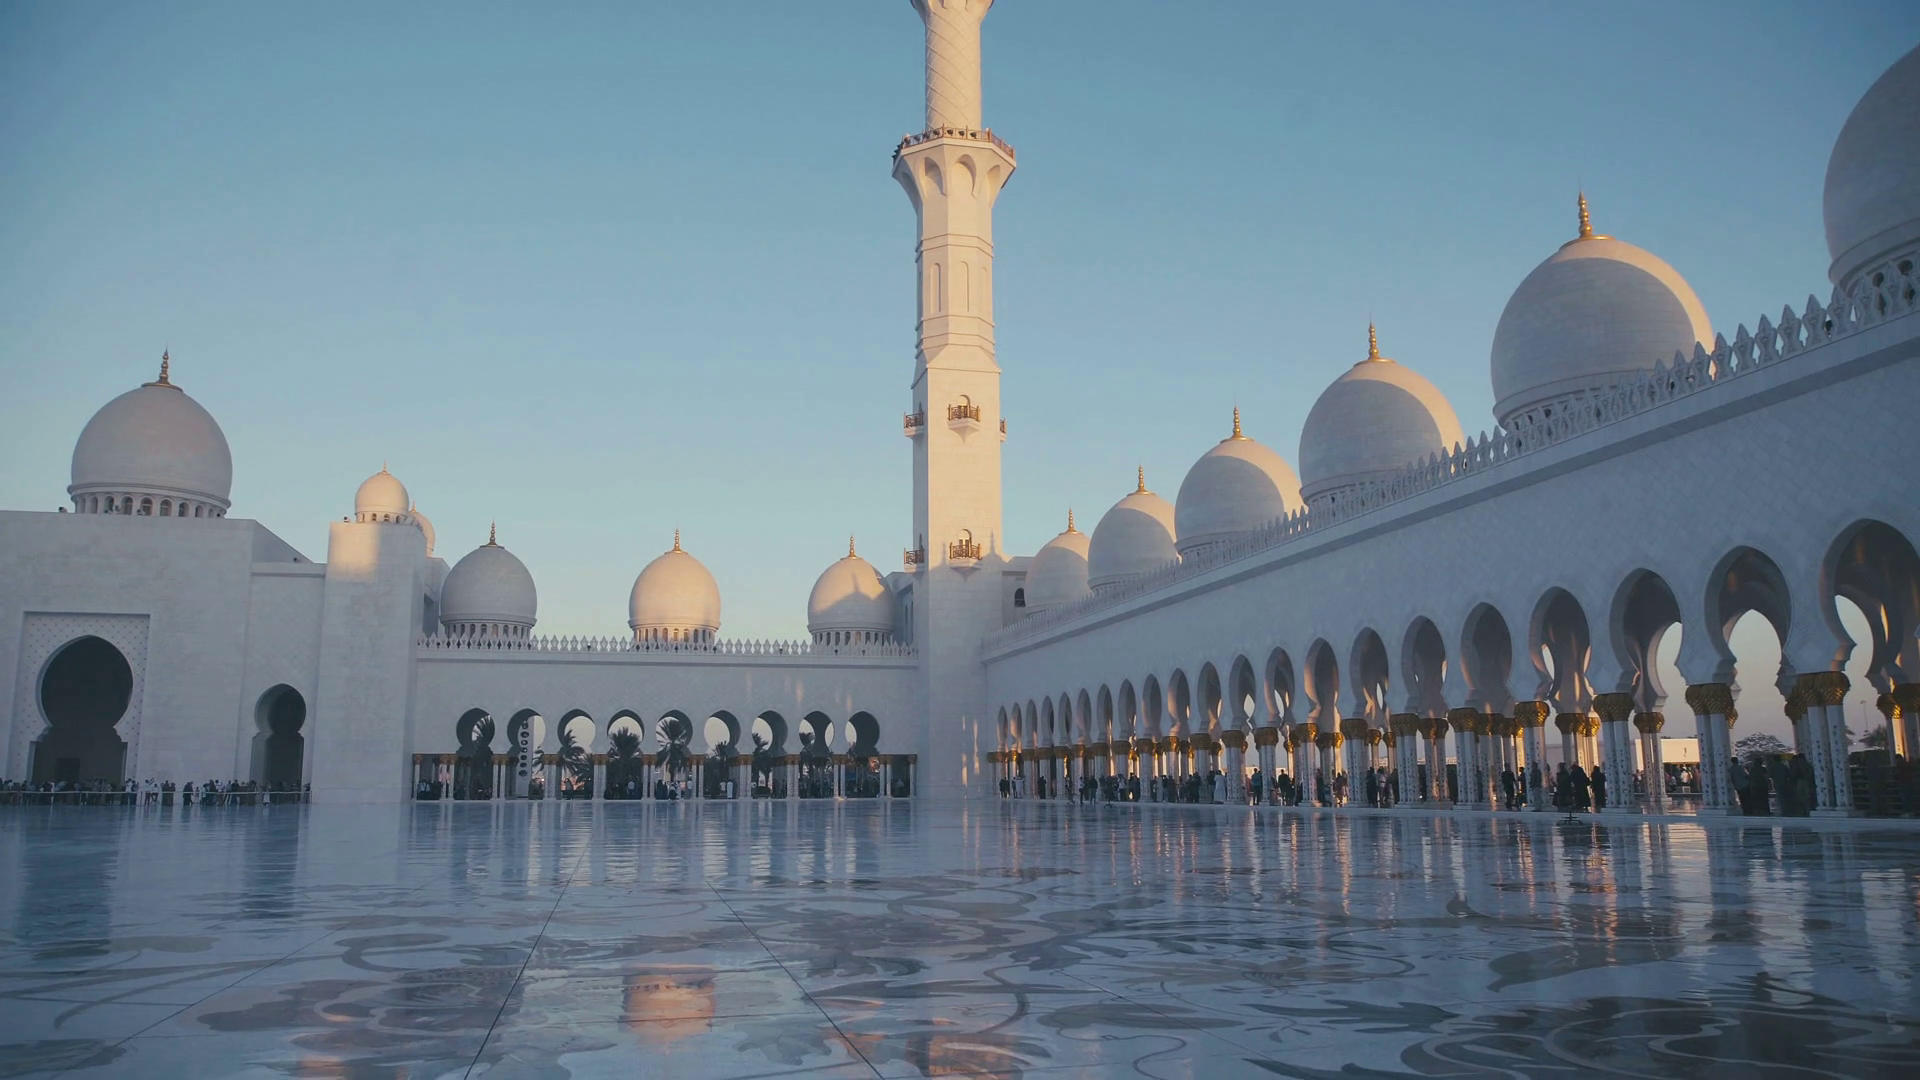 UAE, 2017: Mosque in Abu Dhabi. The minaret of the main prayer hall ...